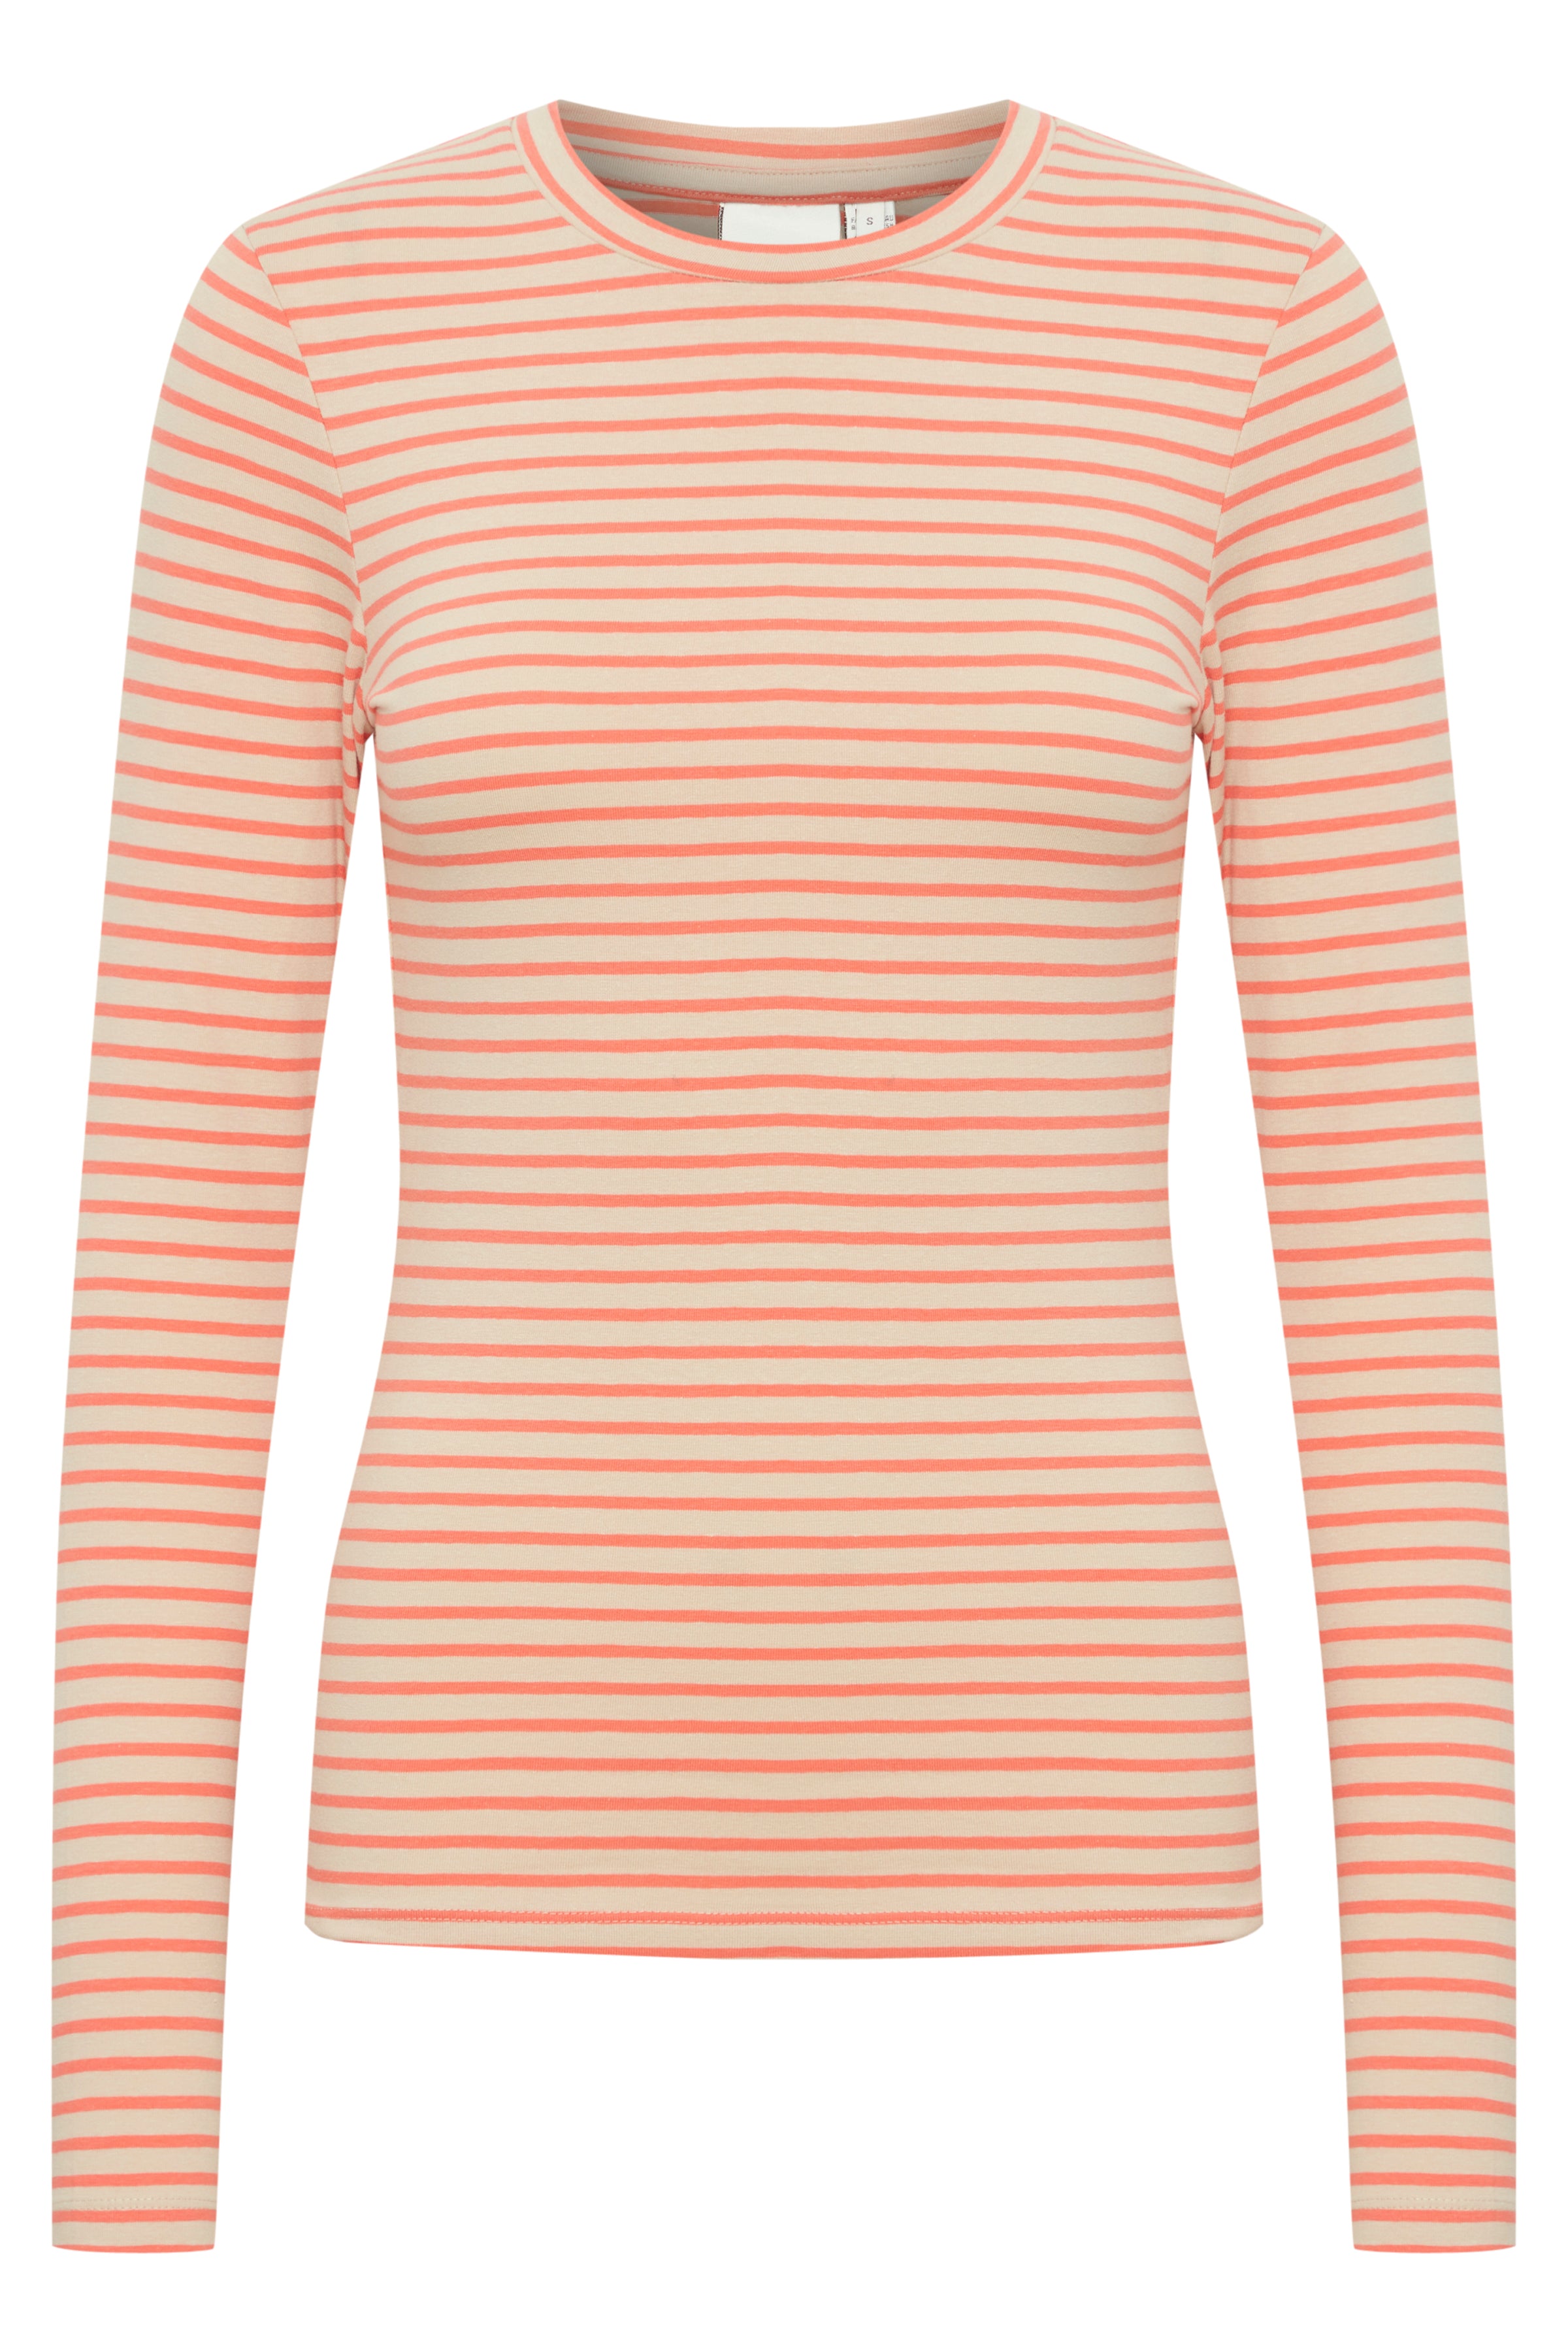 IHMira Long Sleeve T Shirt - Coral